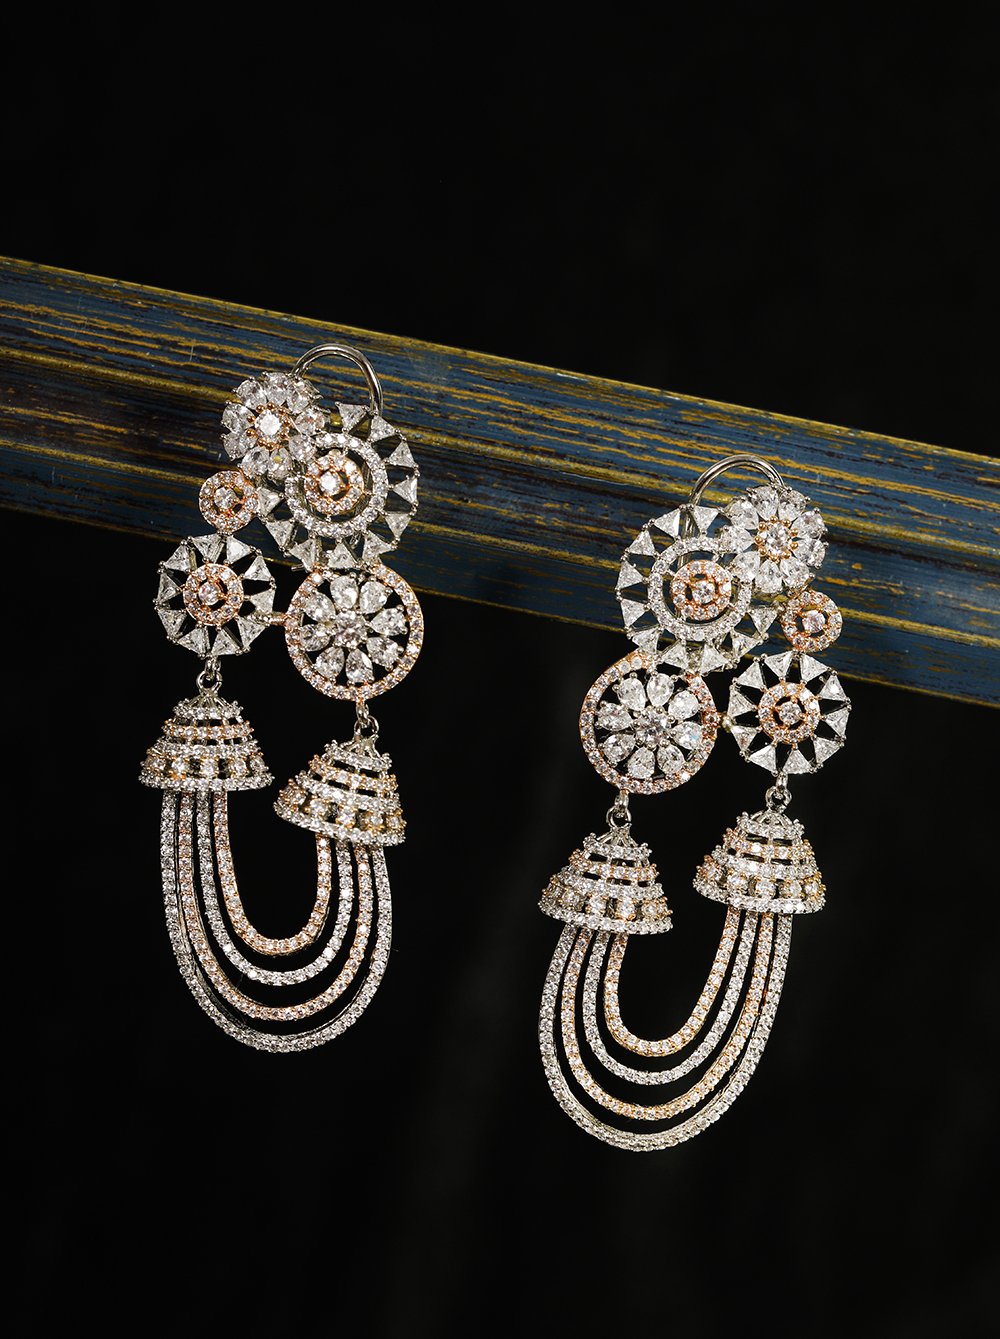 Long Earrings - Buy Long Earrings online in India